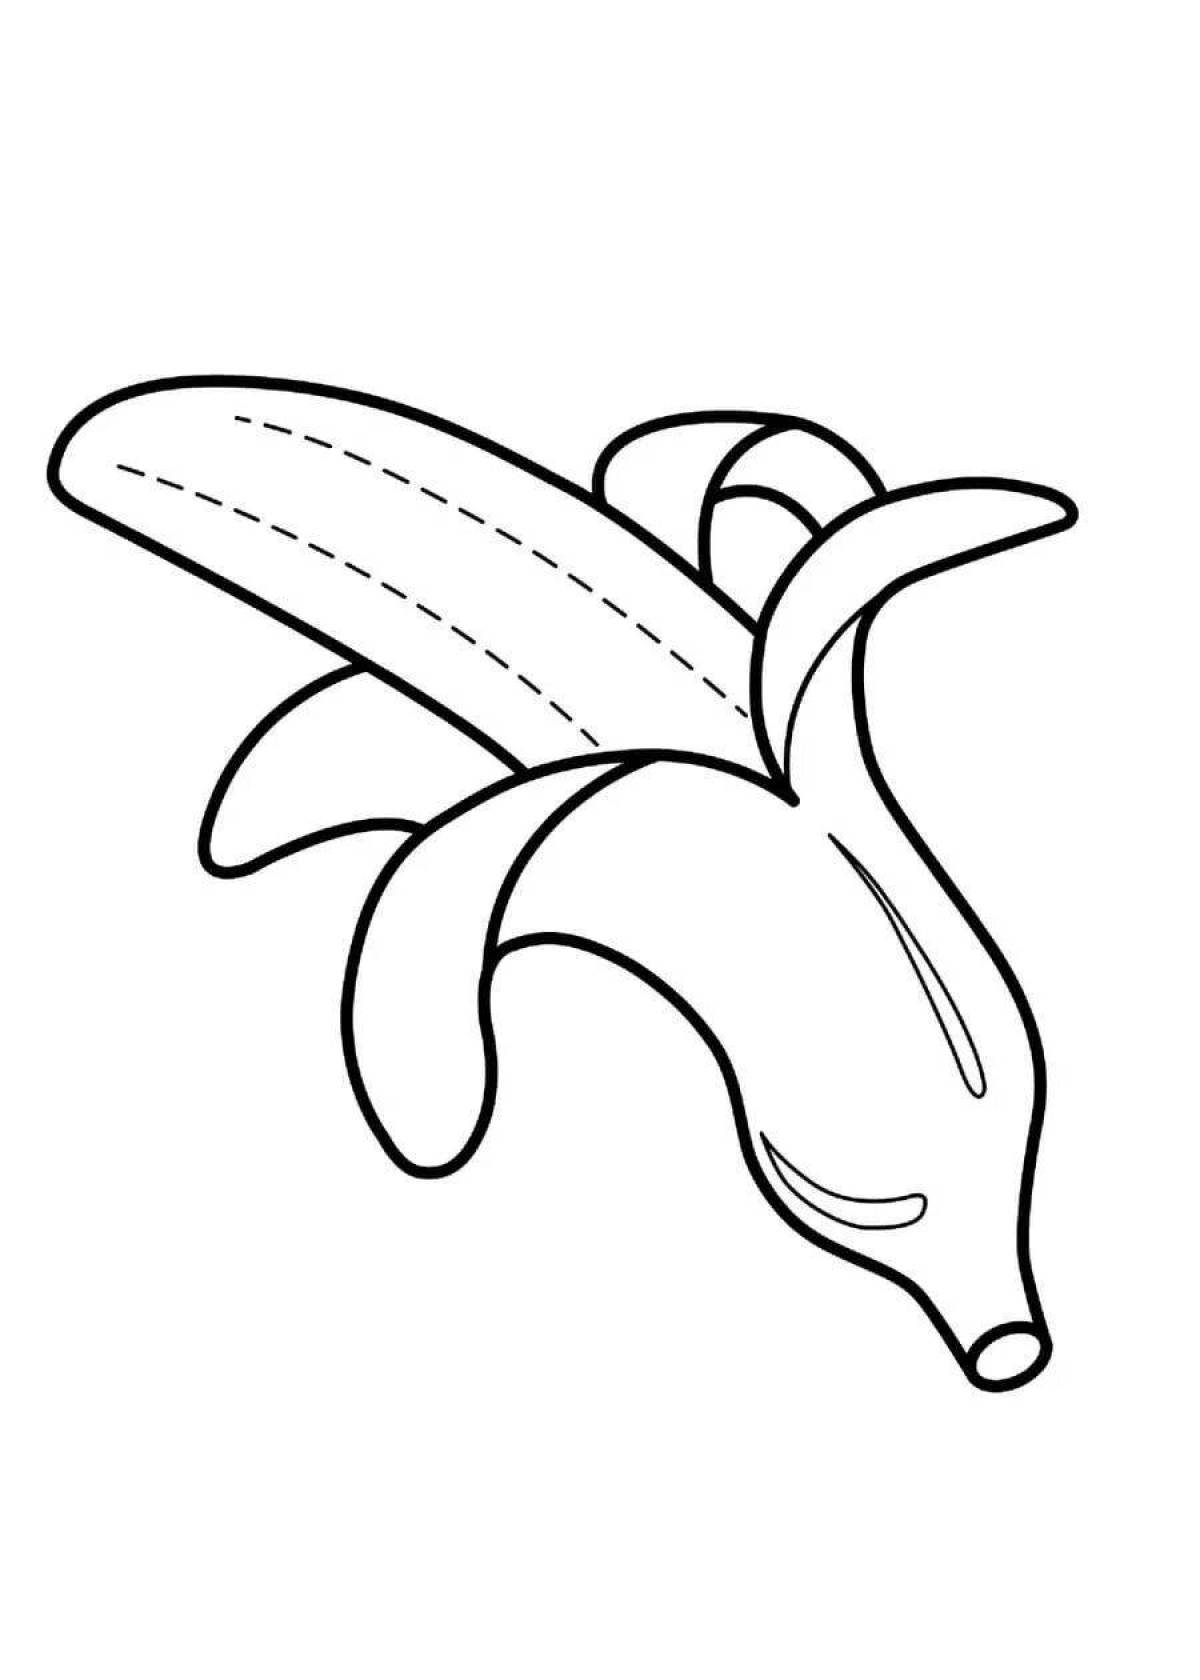 Delightful drawing of a banana